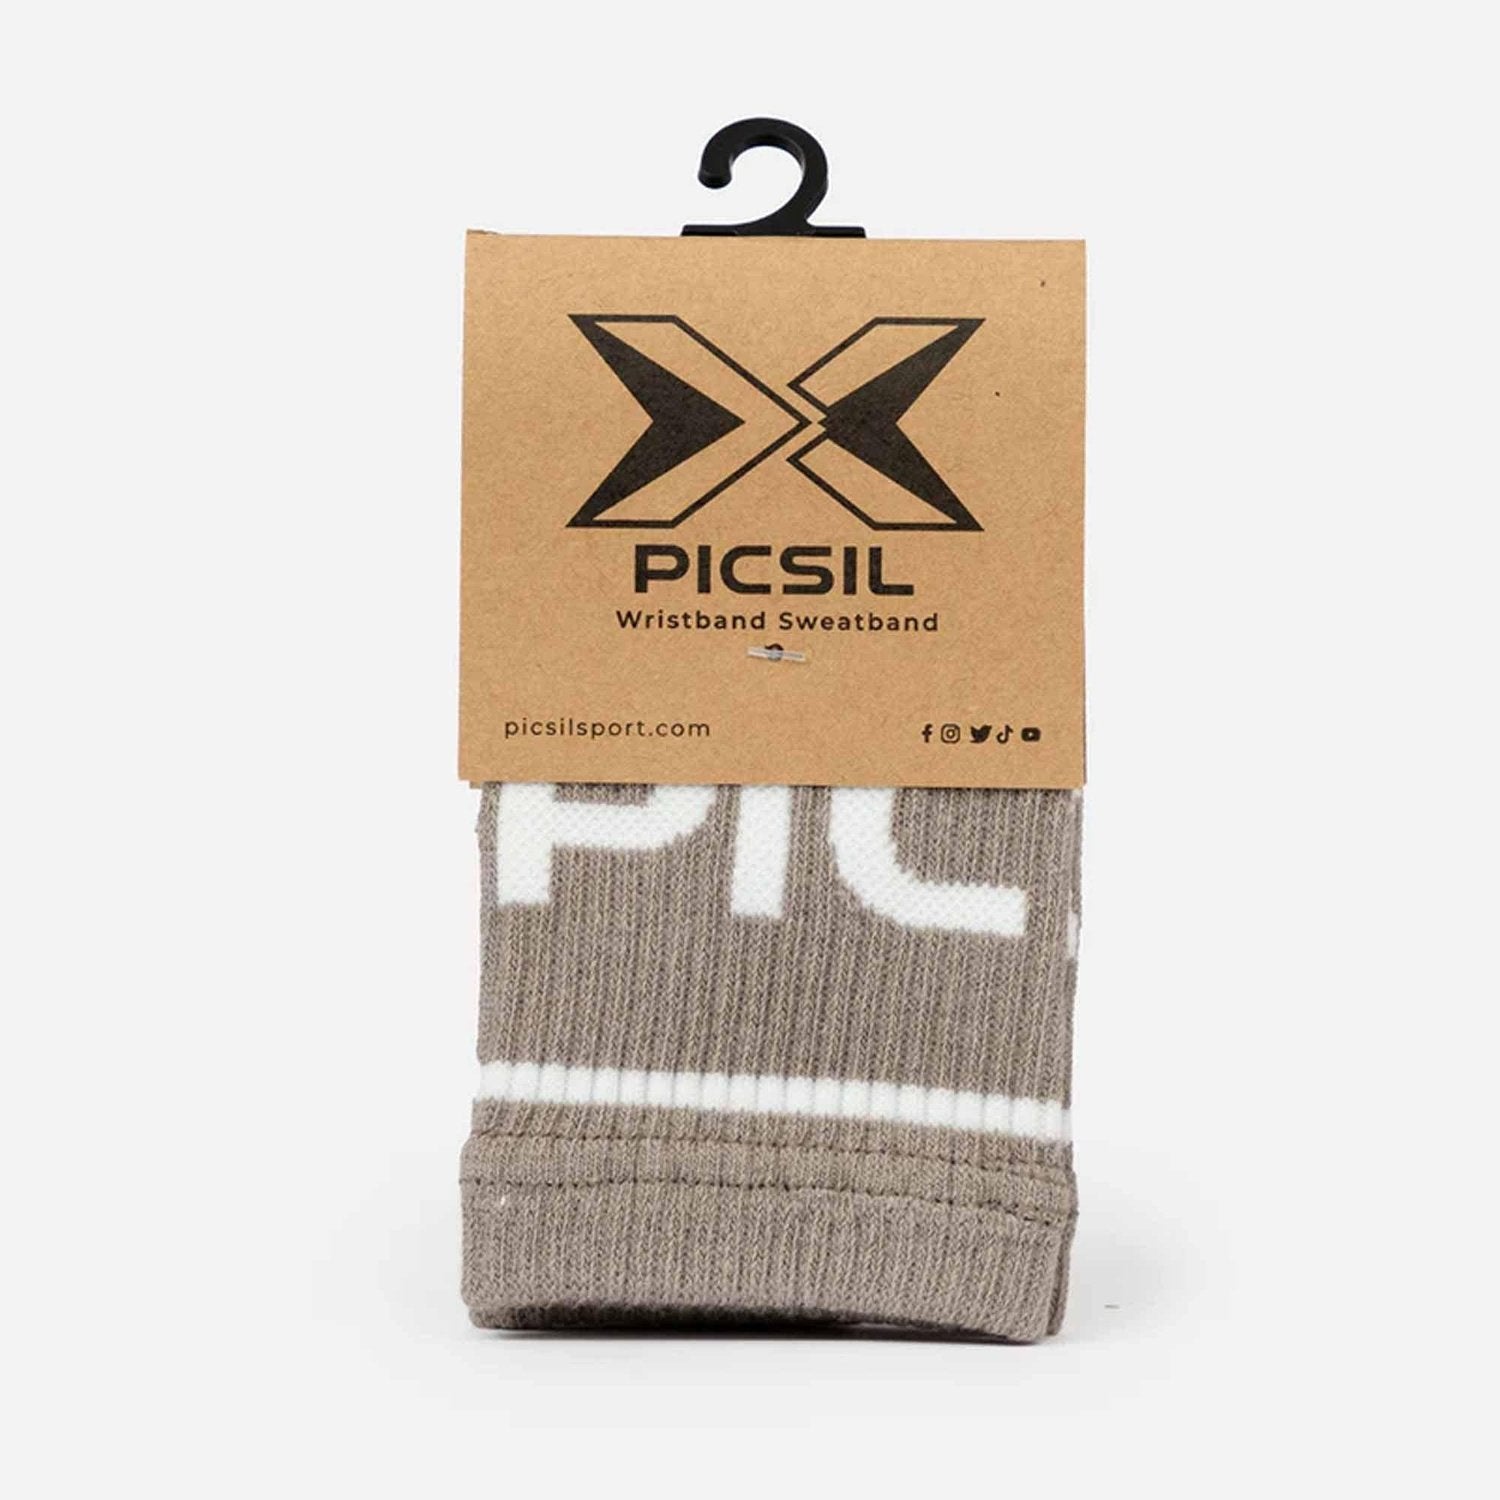 PicSil Wrist Bands (Schweissbänder) Taupe kaufen bei HighPowered.ch